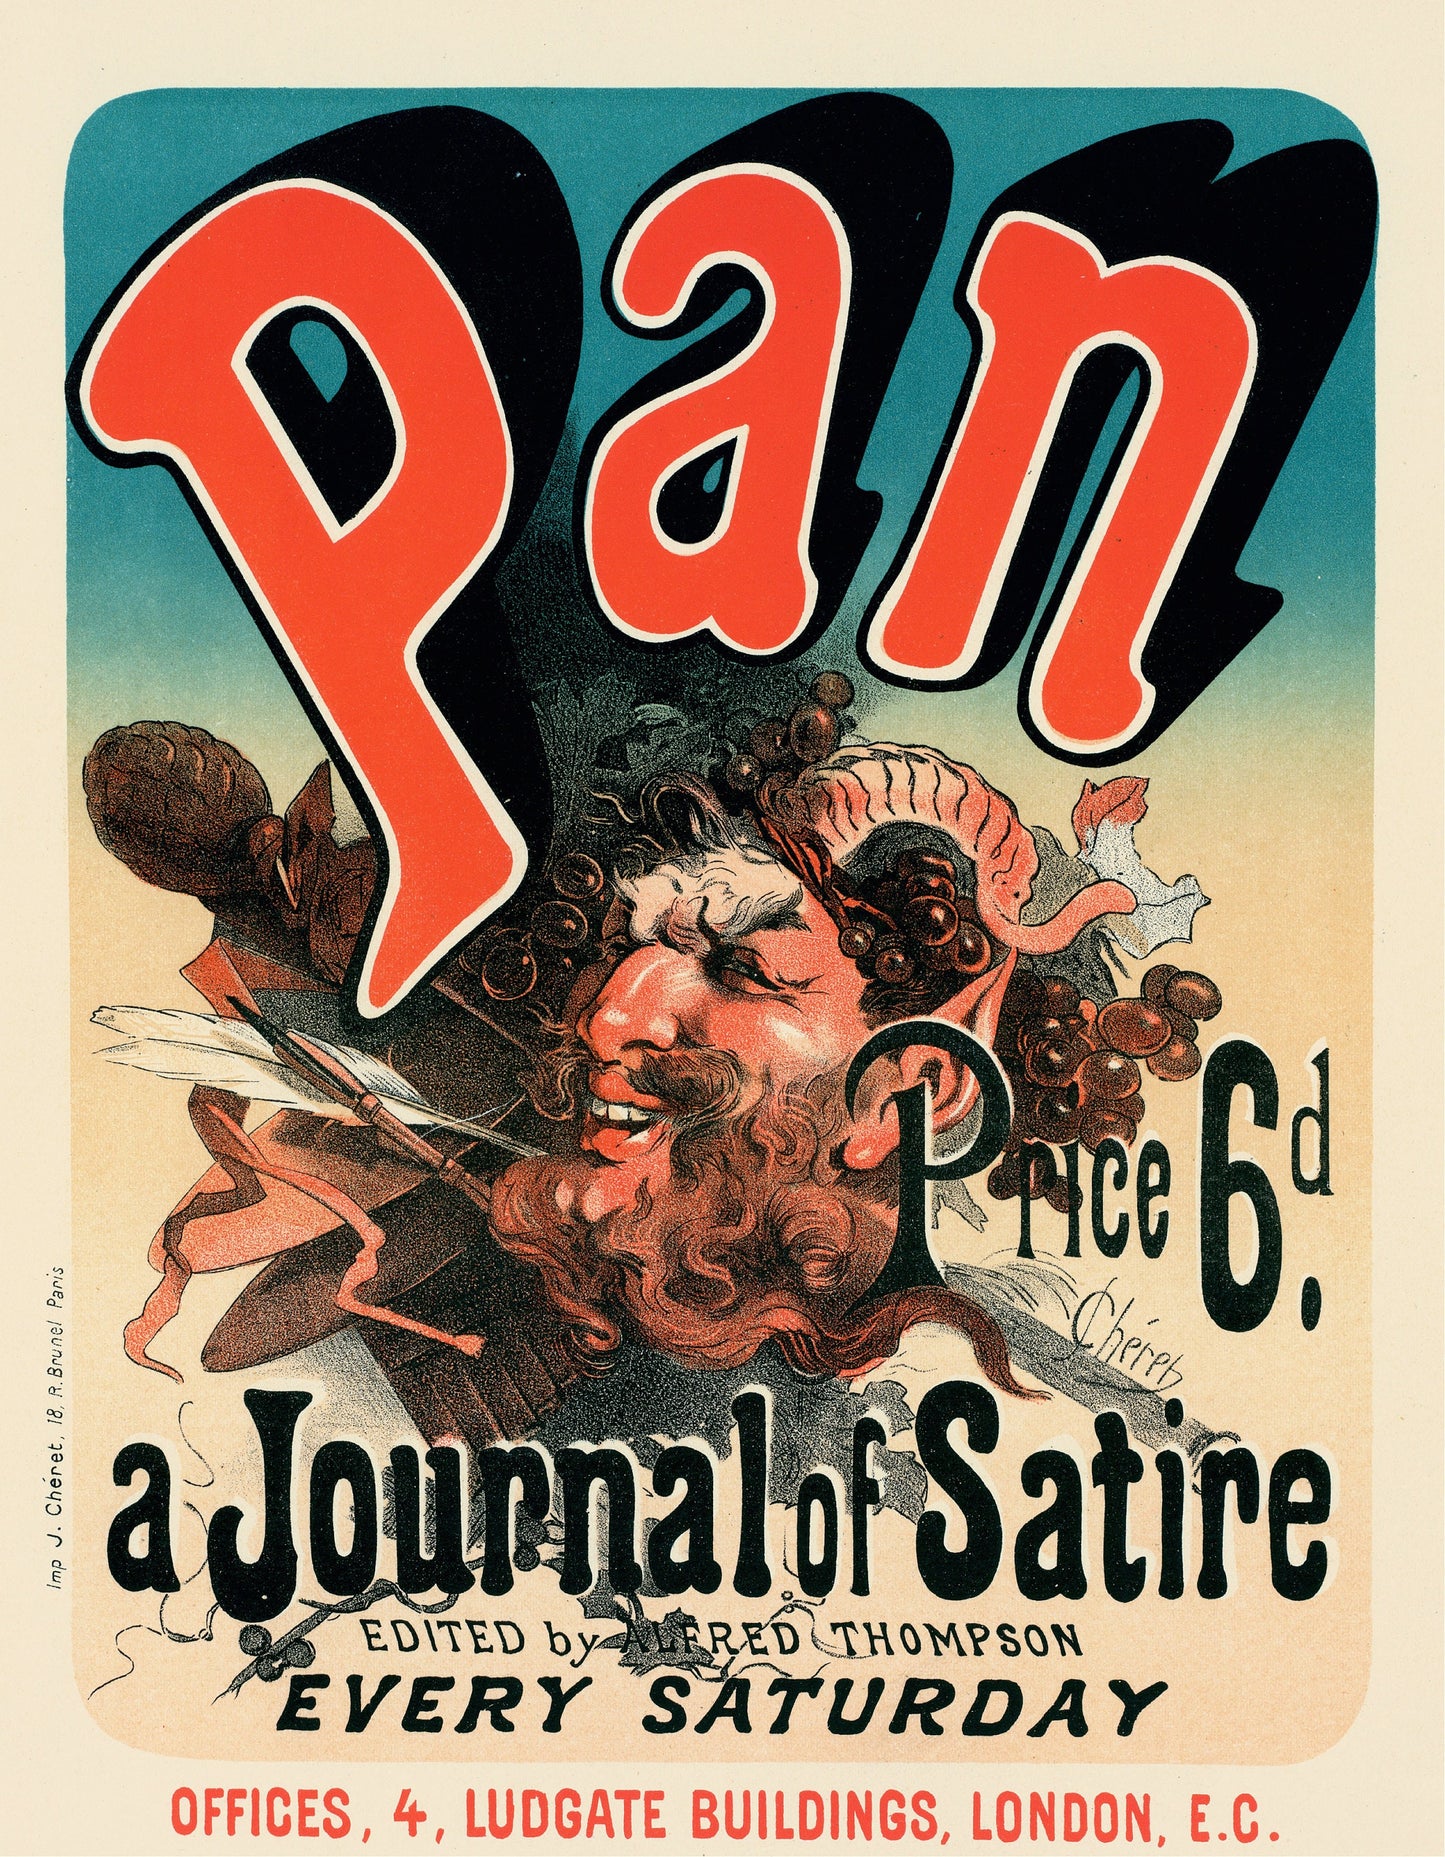 Jules Cheret Poster Advertisements Set 3 [30 Images]